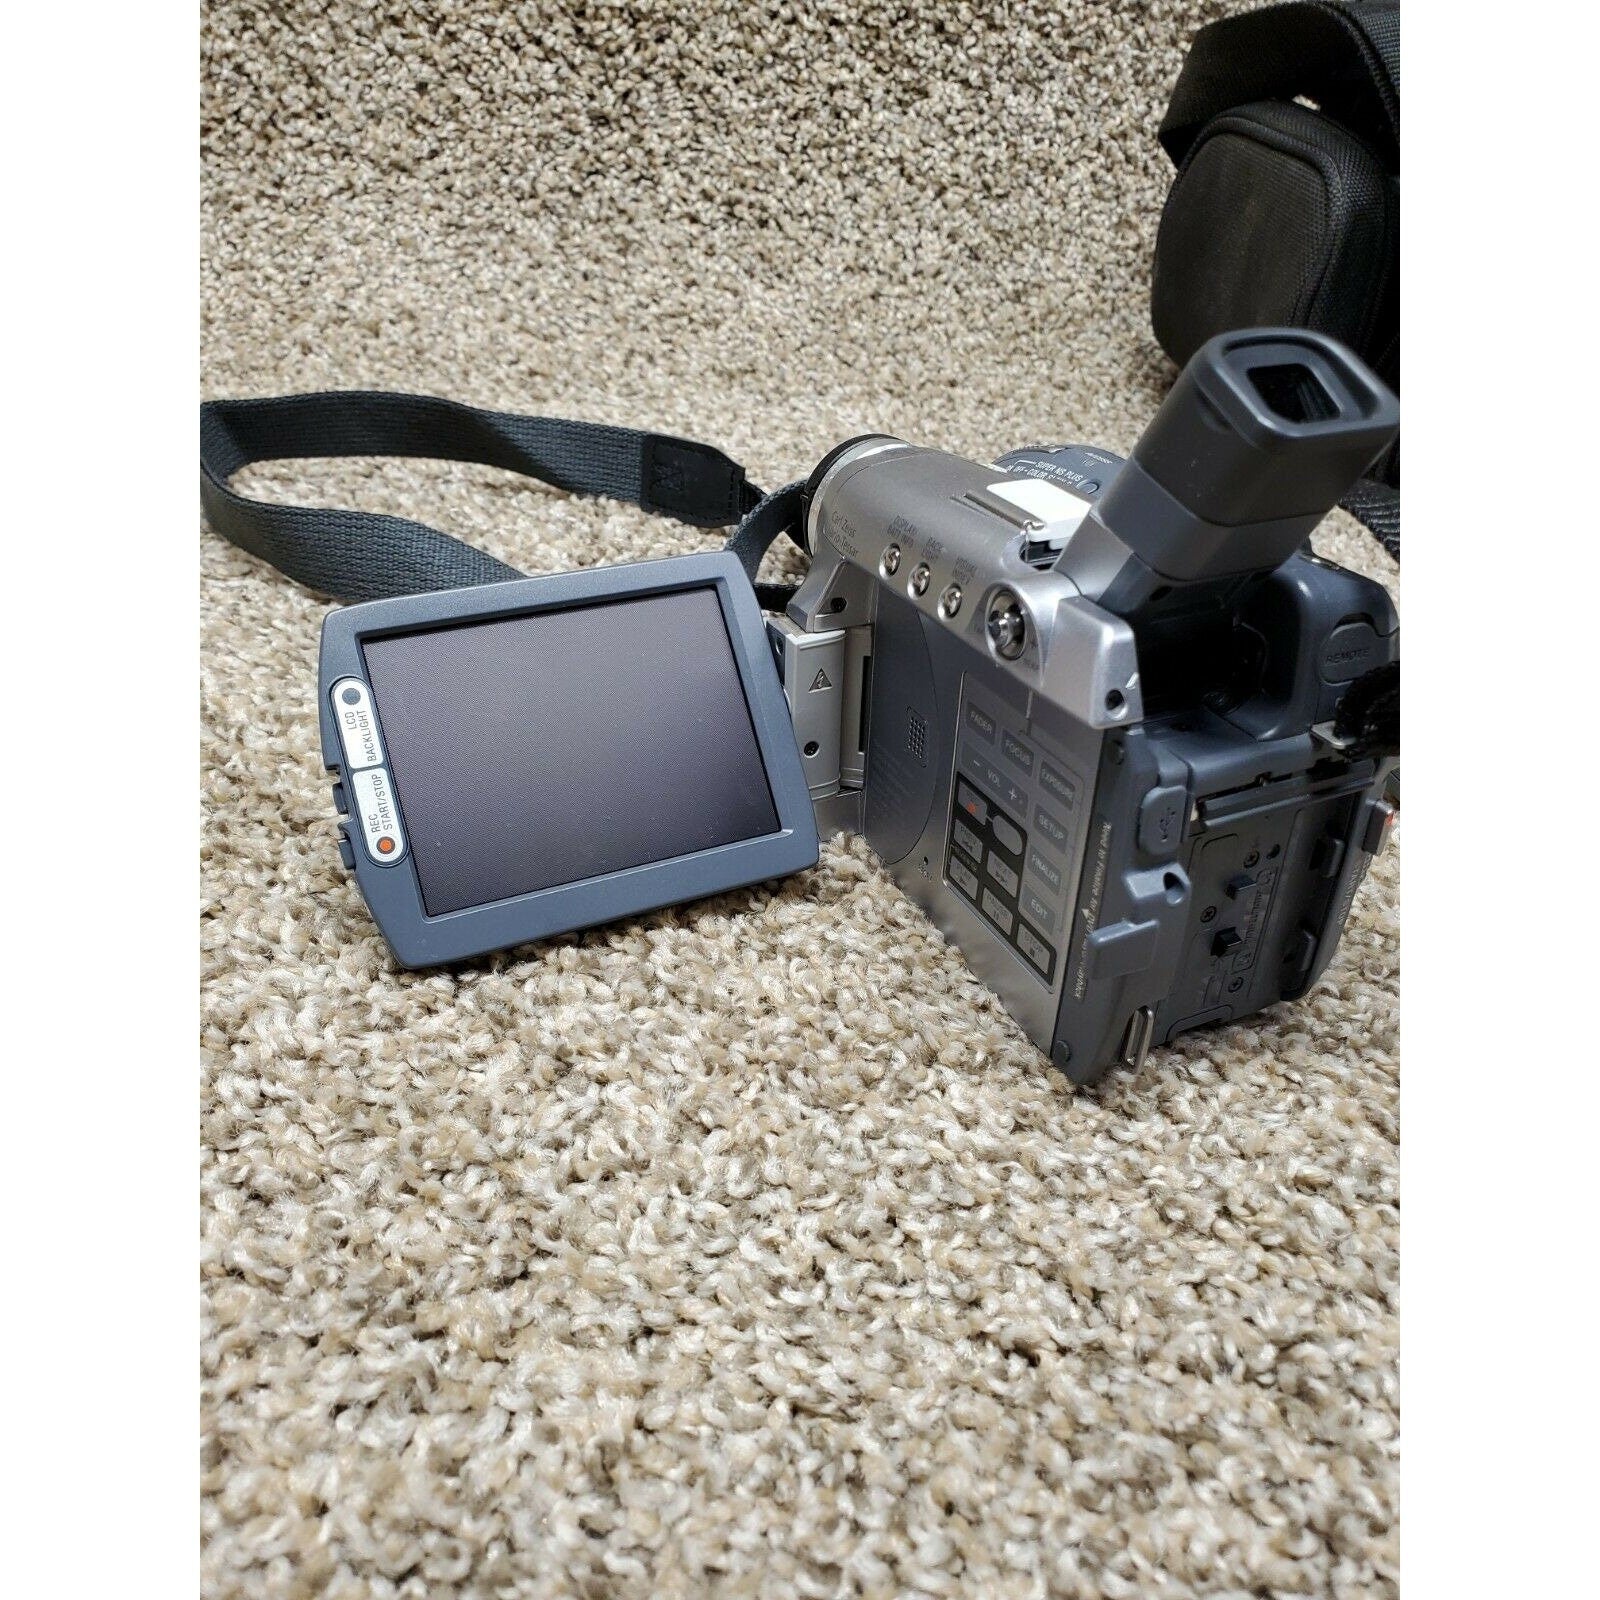 Sony DCR-DVD103 Handycam Digital Video Camera Recorder DVD-R/RW 120x